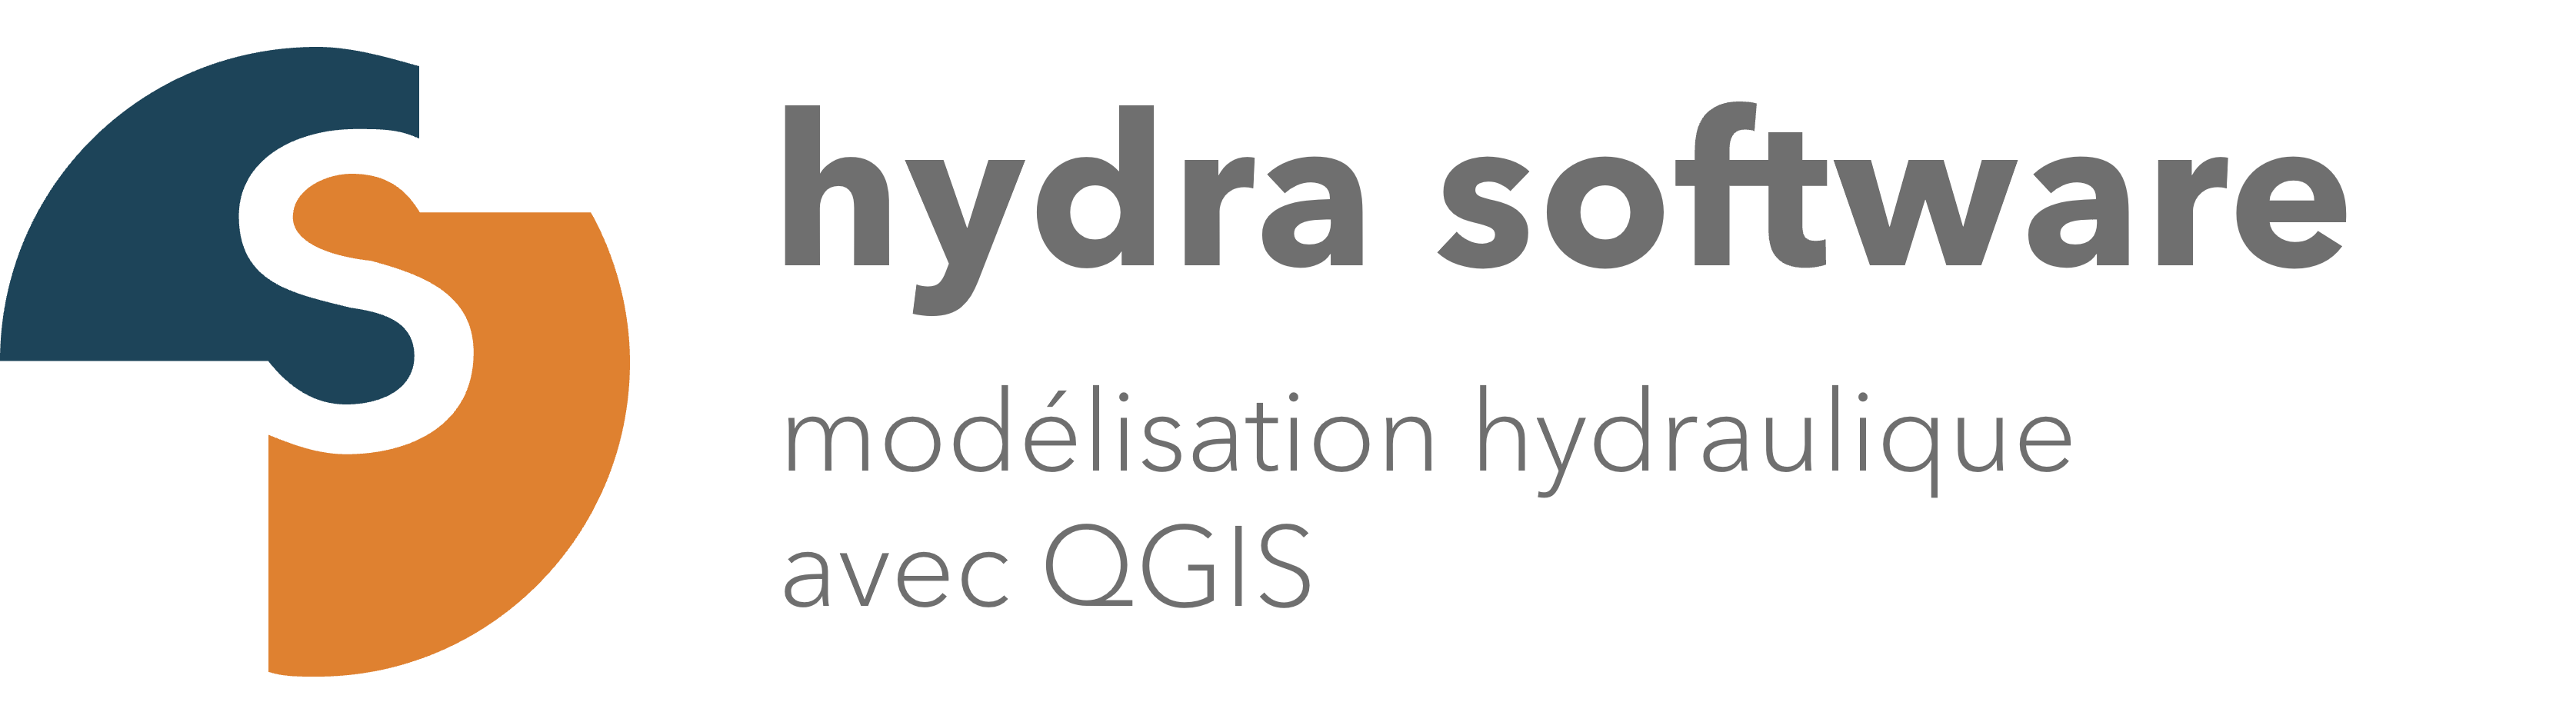 hydra software